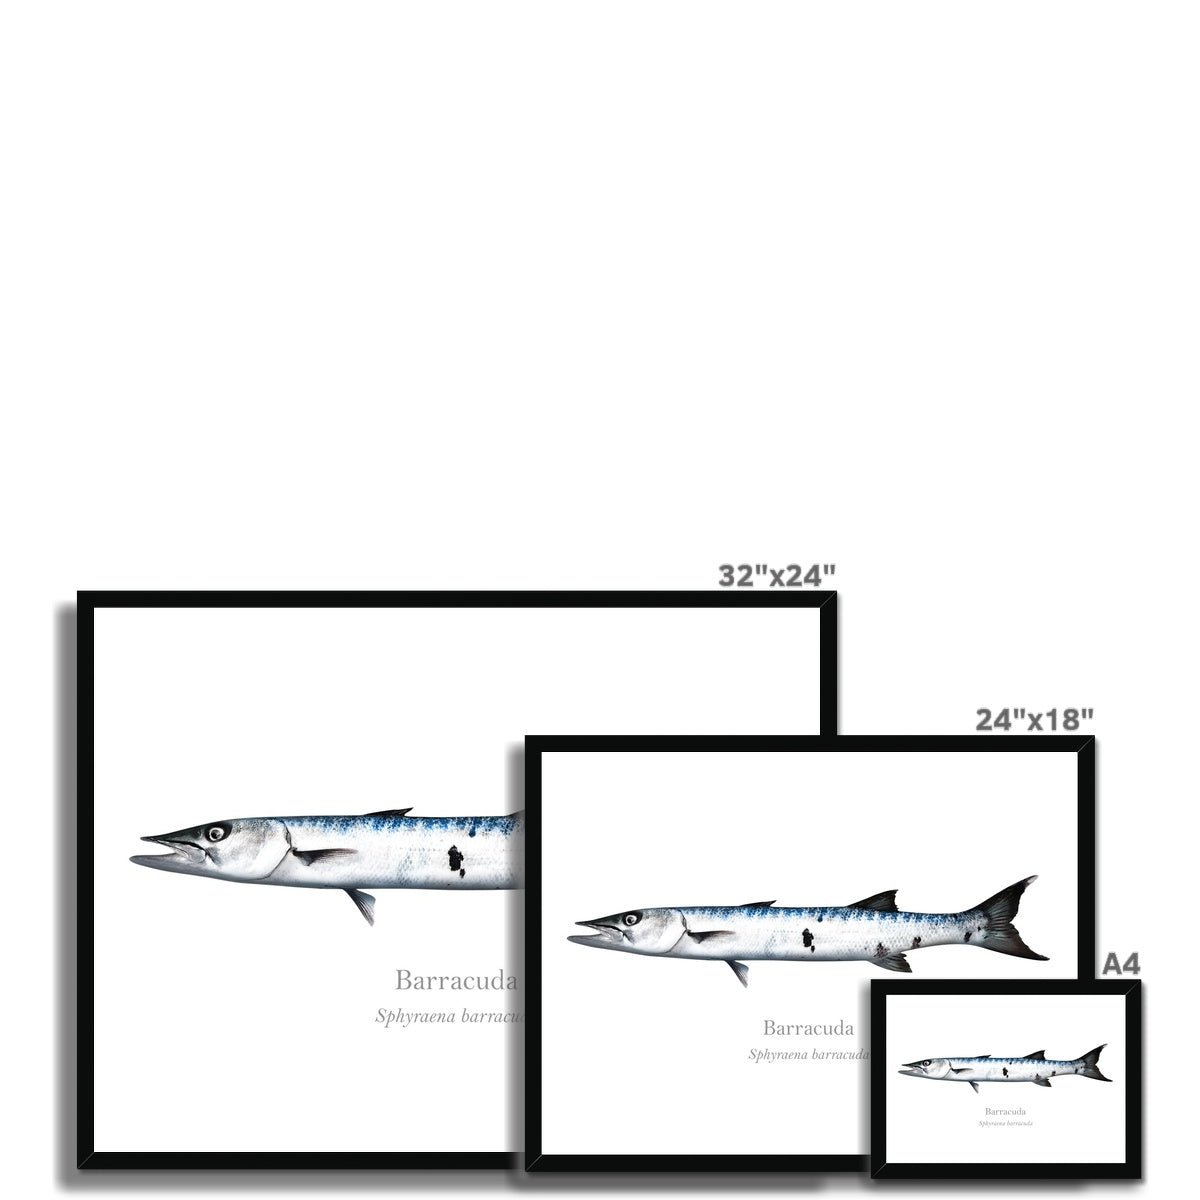 Barracuda - Framed Print - With Scientific Name - madfishlab.com